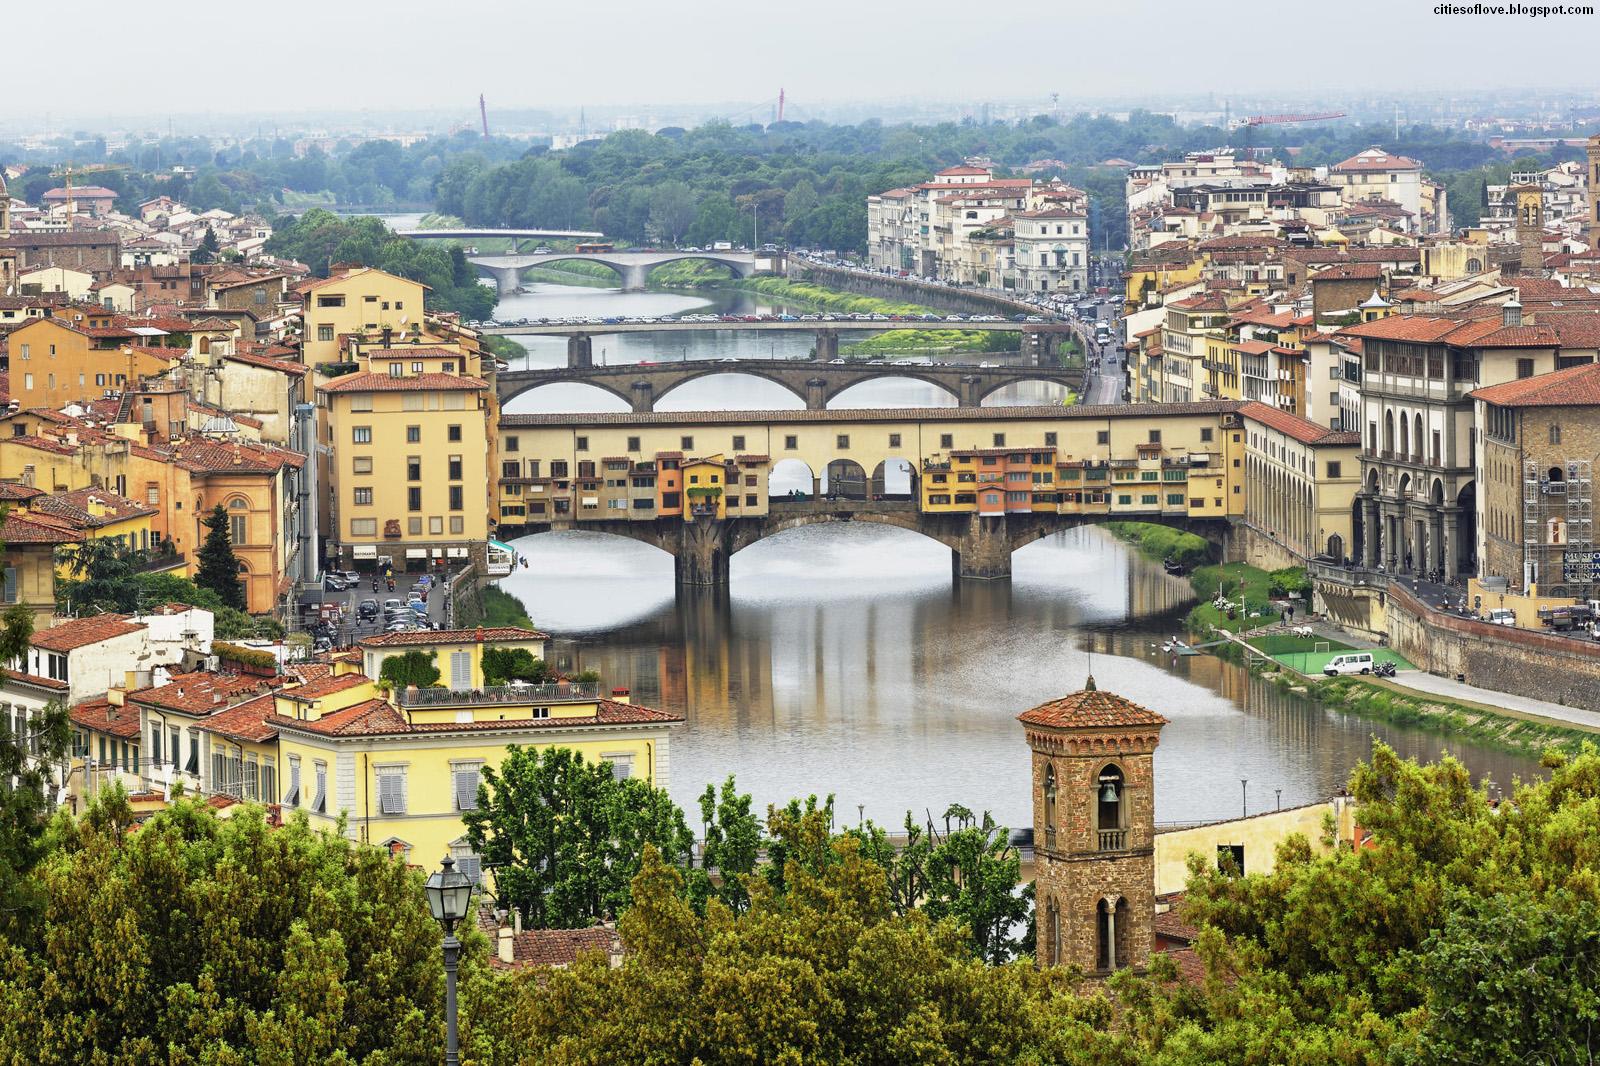  Old Bridge Arno River Italy Hd Desktop Wallpaper Image Gallery and HD